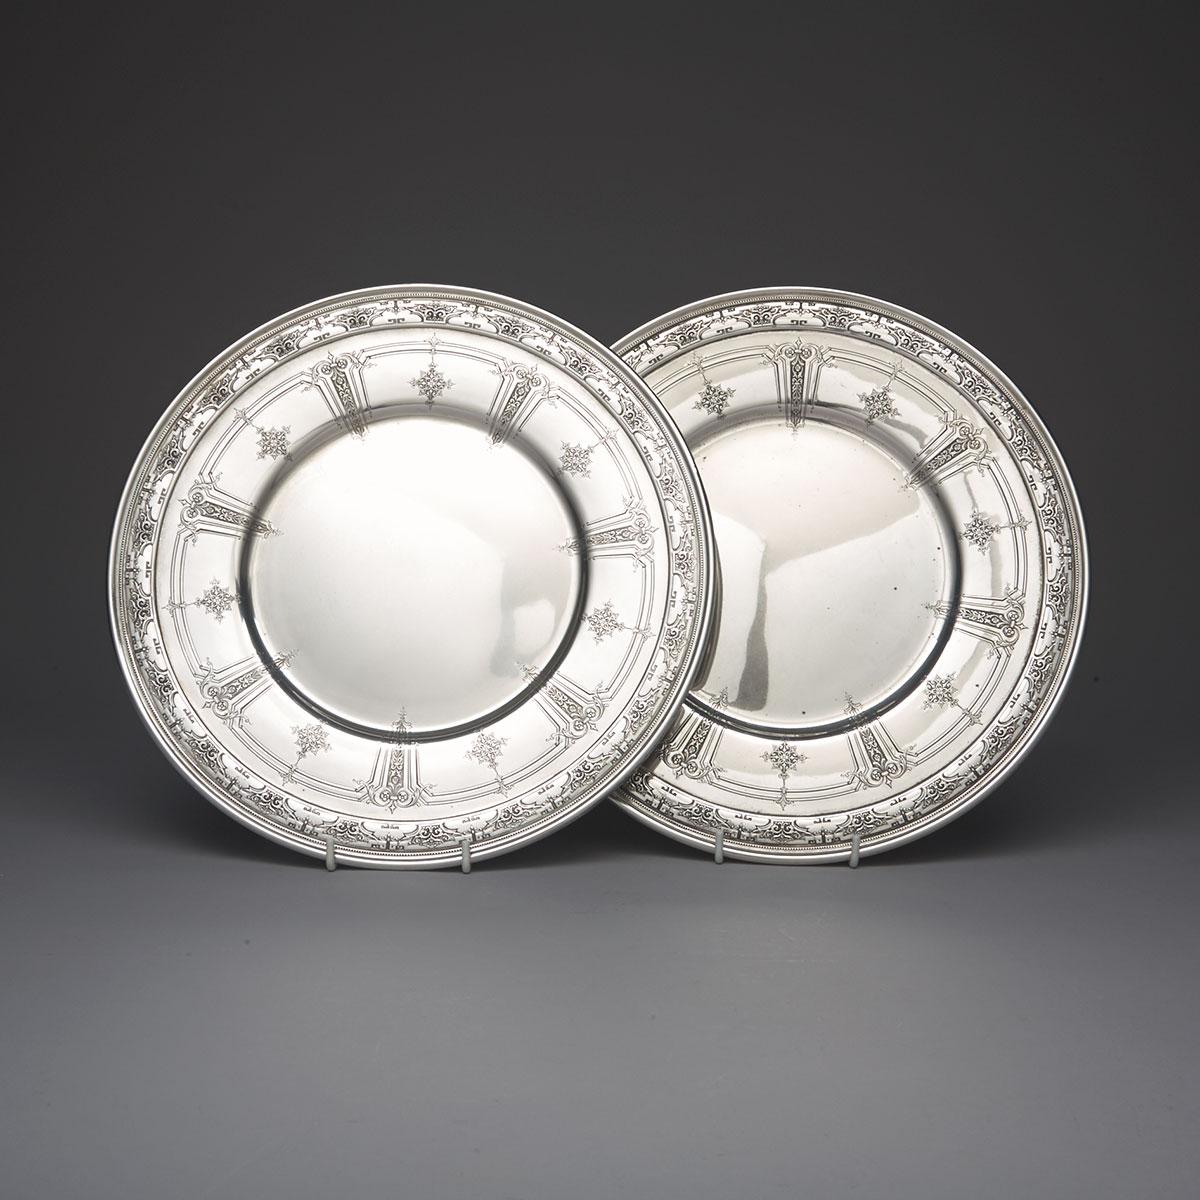 Pair of American Silver ‘Seville’ Service Plates, Towle Silversmiths, Newburyport, Mass., 20th century